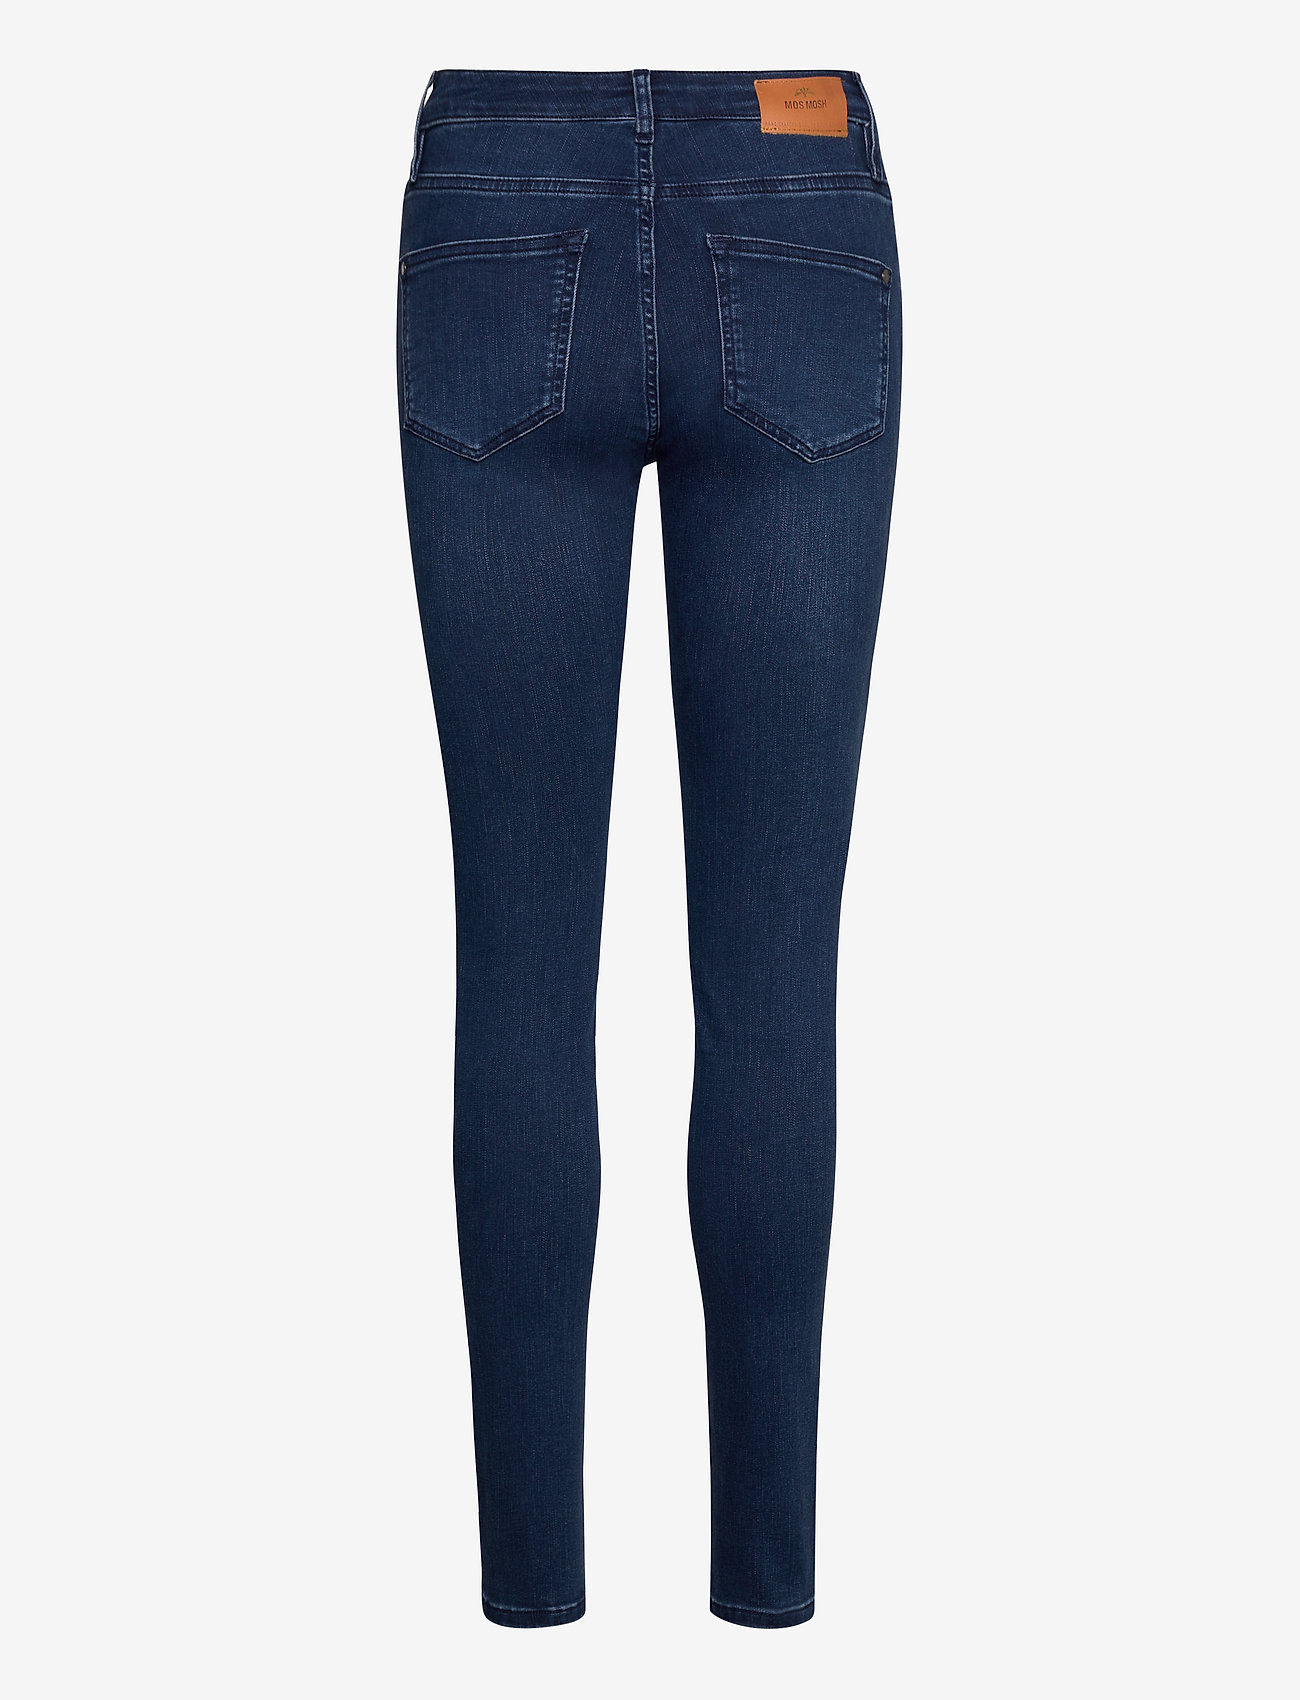 MOS MOSH - MMALLI CORE JEANS - skinny jeans - blue denim - 1